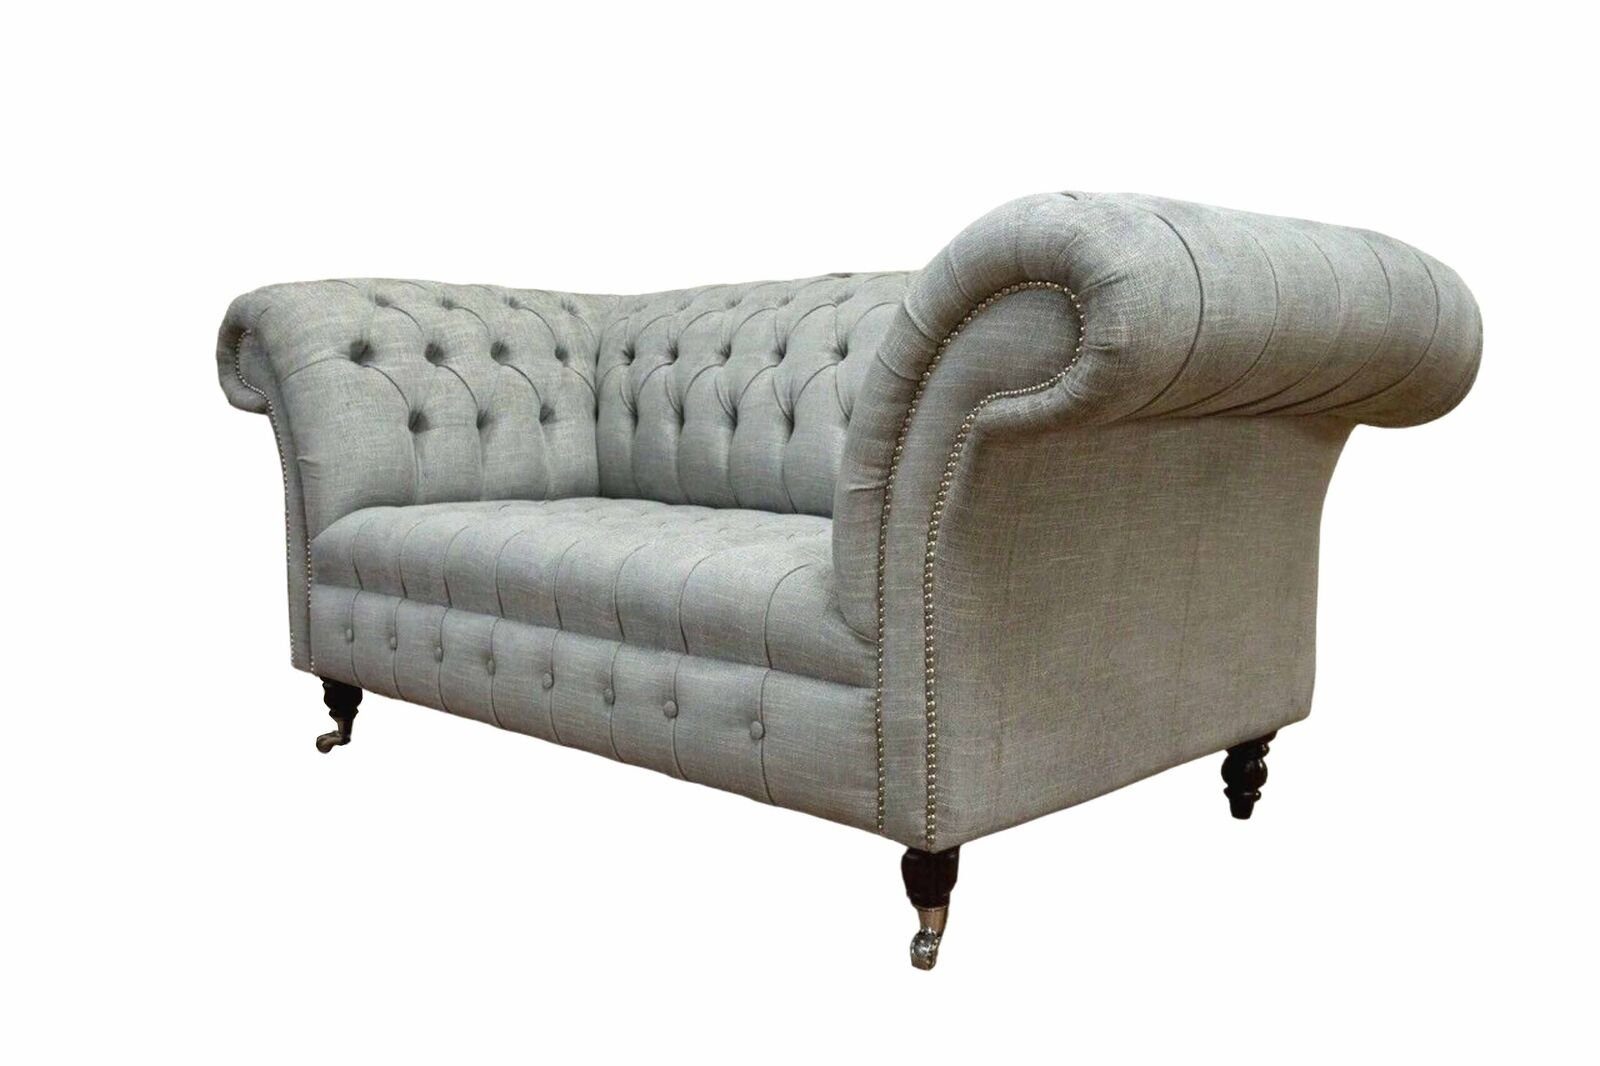 JVmoebel Sofa Chesterfield Zweisitzer Couch Polster Sofa In Europe Luxus, Made Couchen Stoff Textil